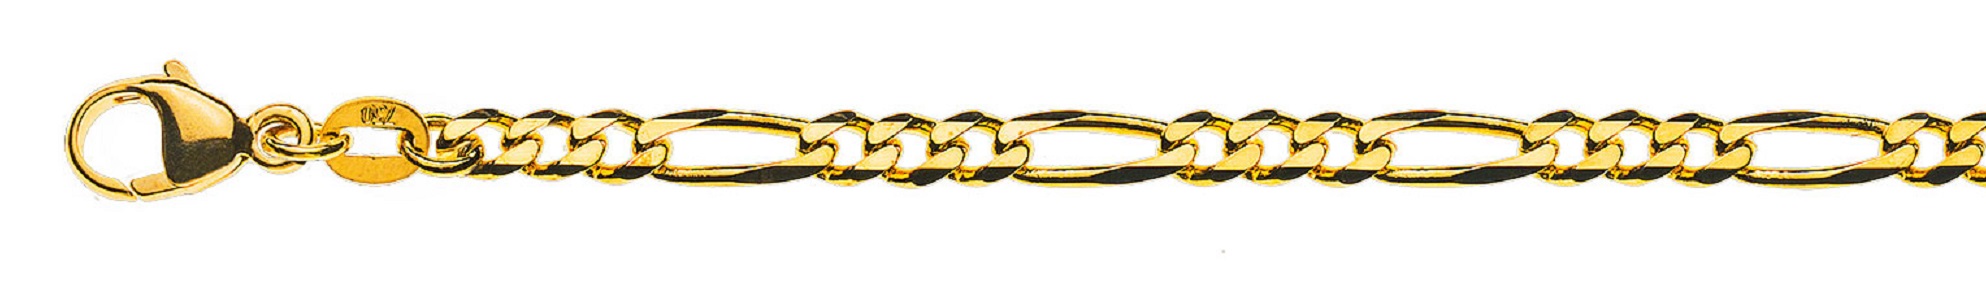 AURONOS Prestige Yellow gold 18K Figaro necklace 42cm 3.4mm